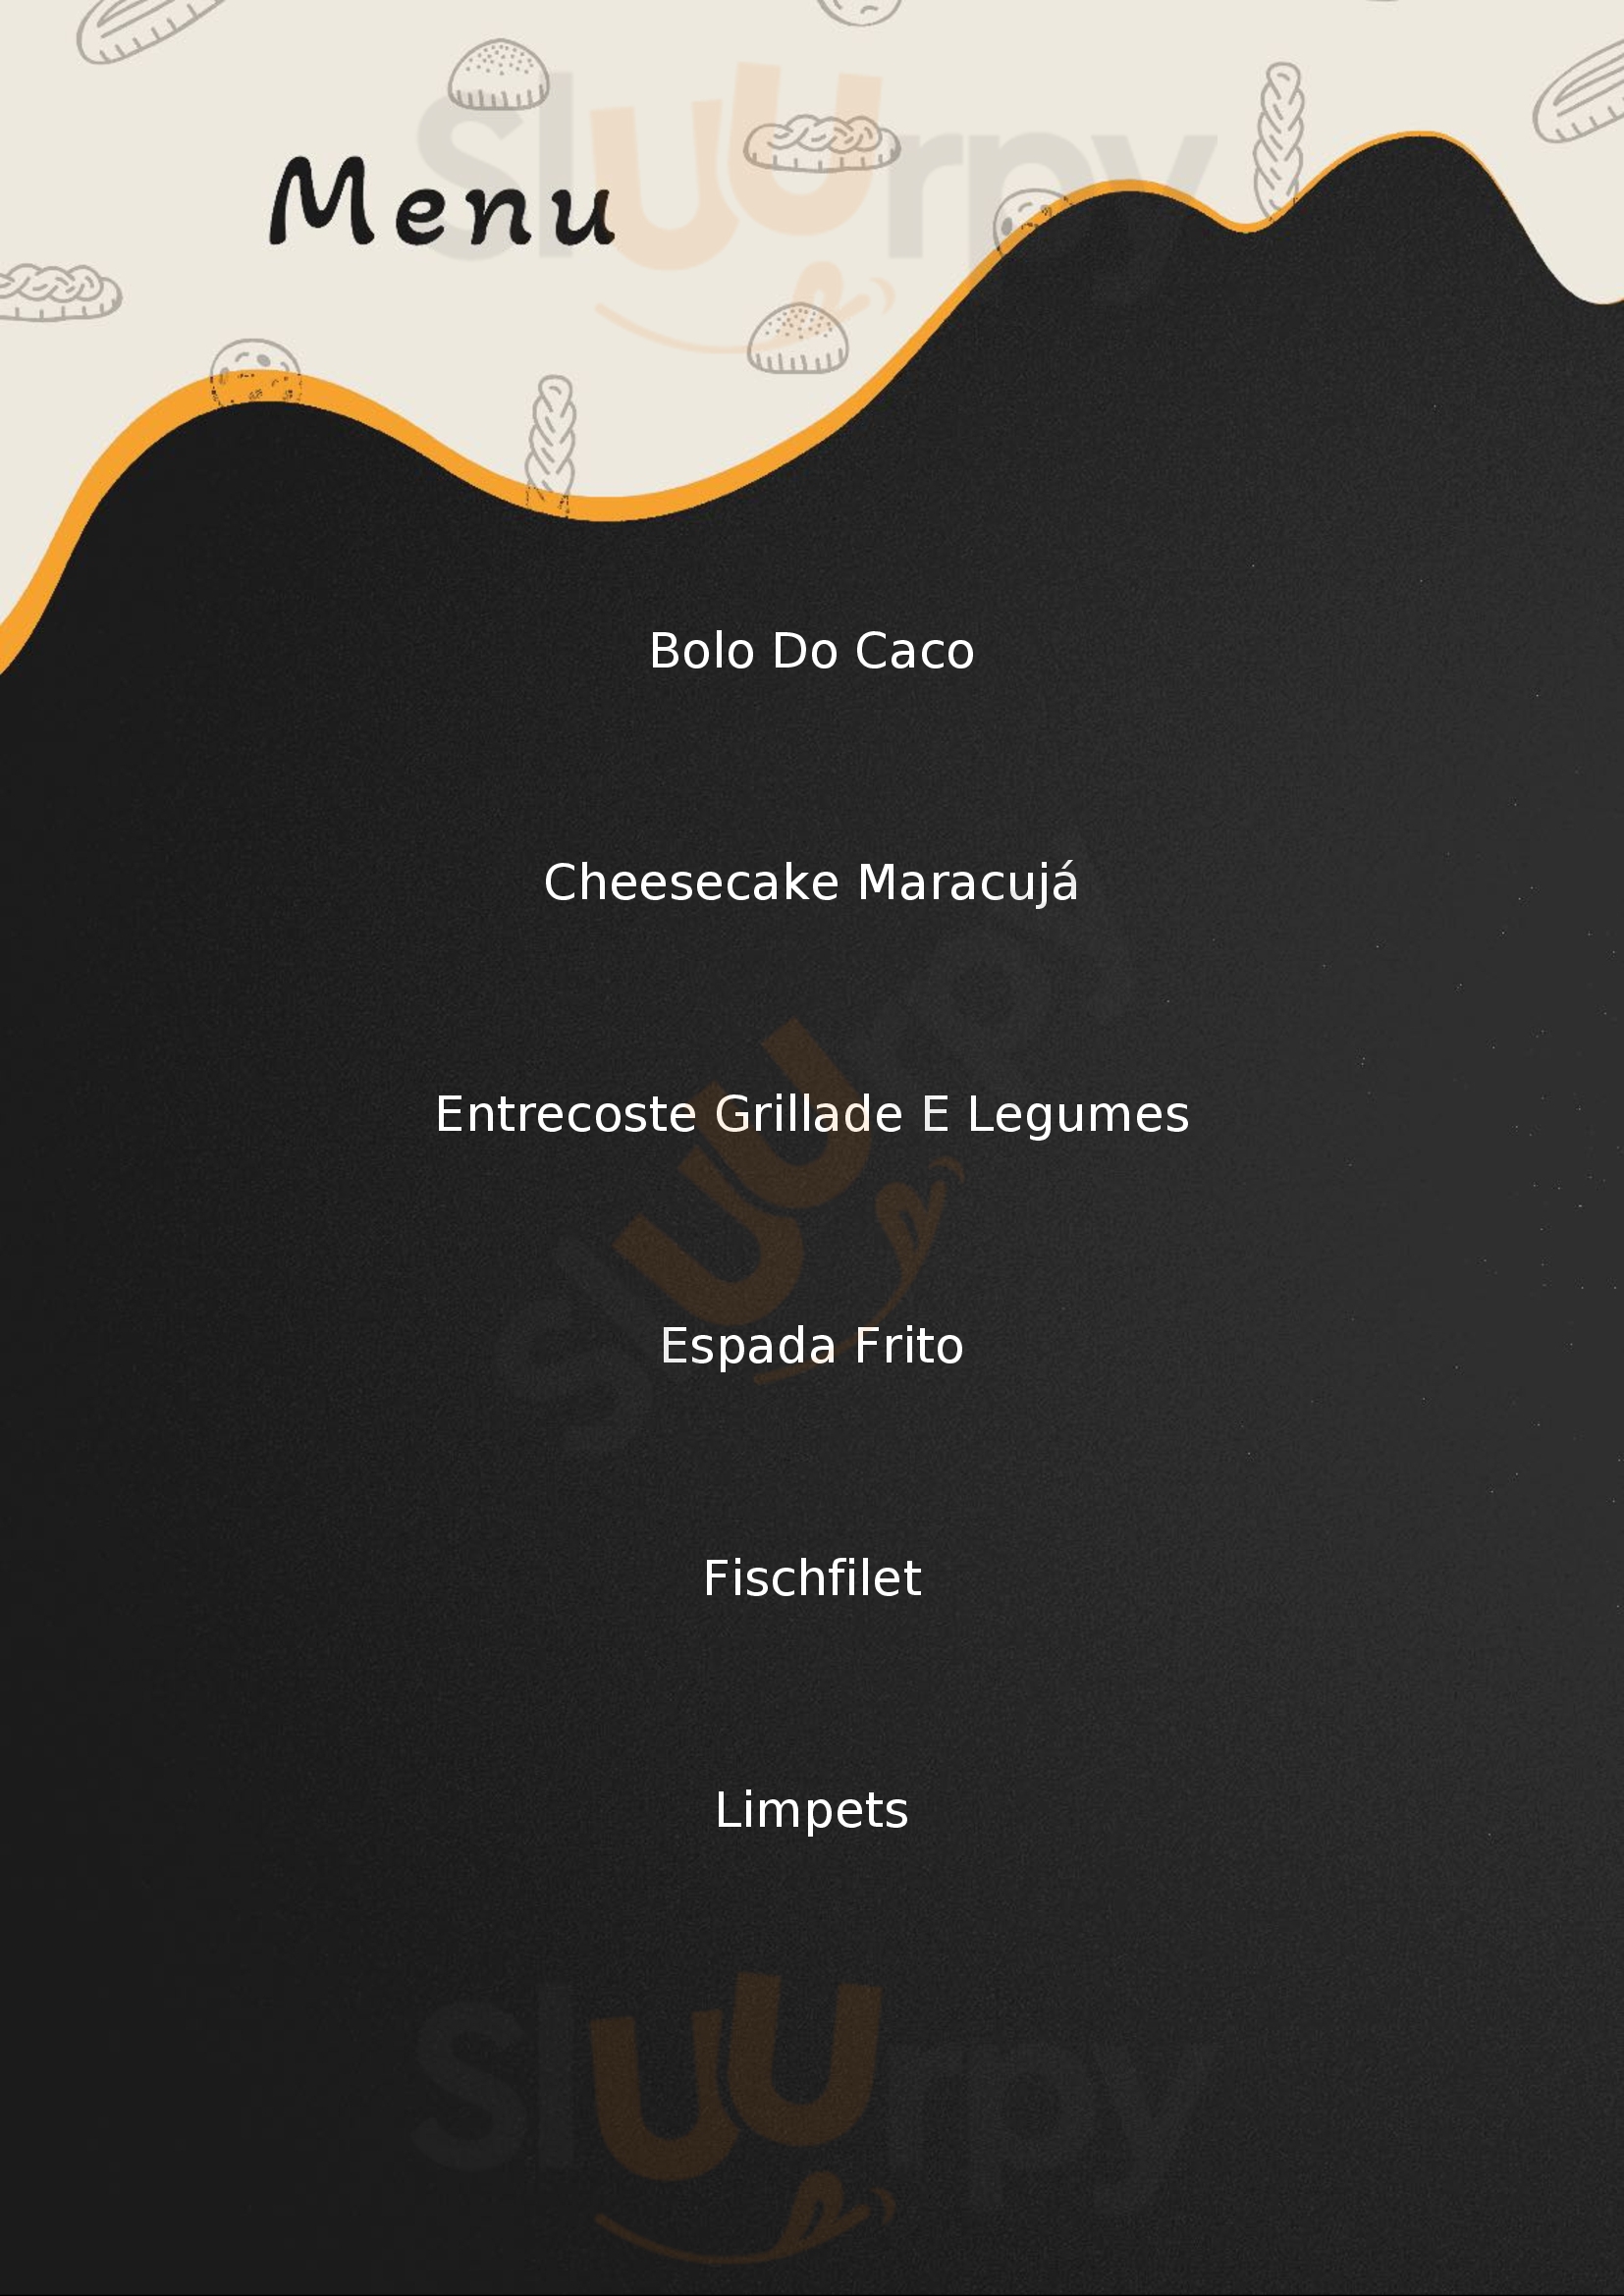 Snack Bar Vieira Funchal Menu - 1